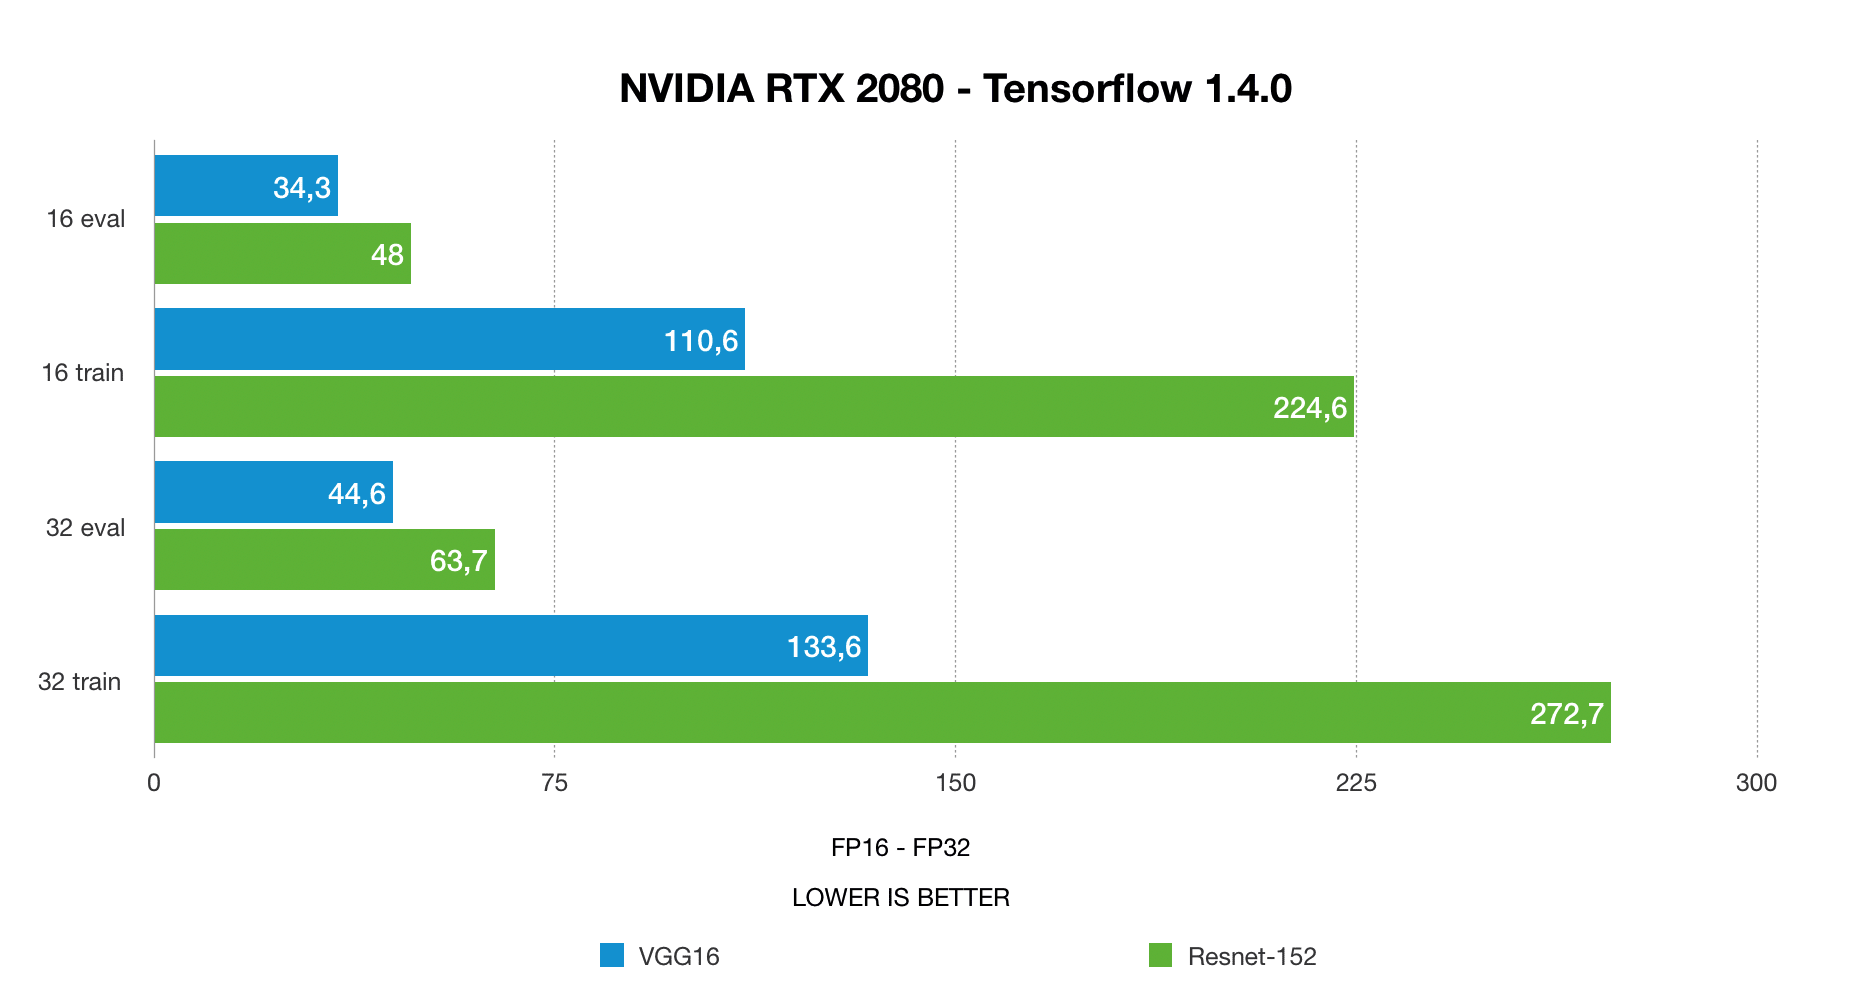 nvidia RTX 2080 deep learning benchmarks